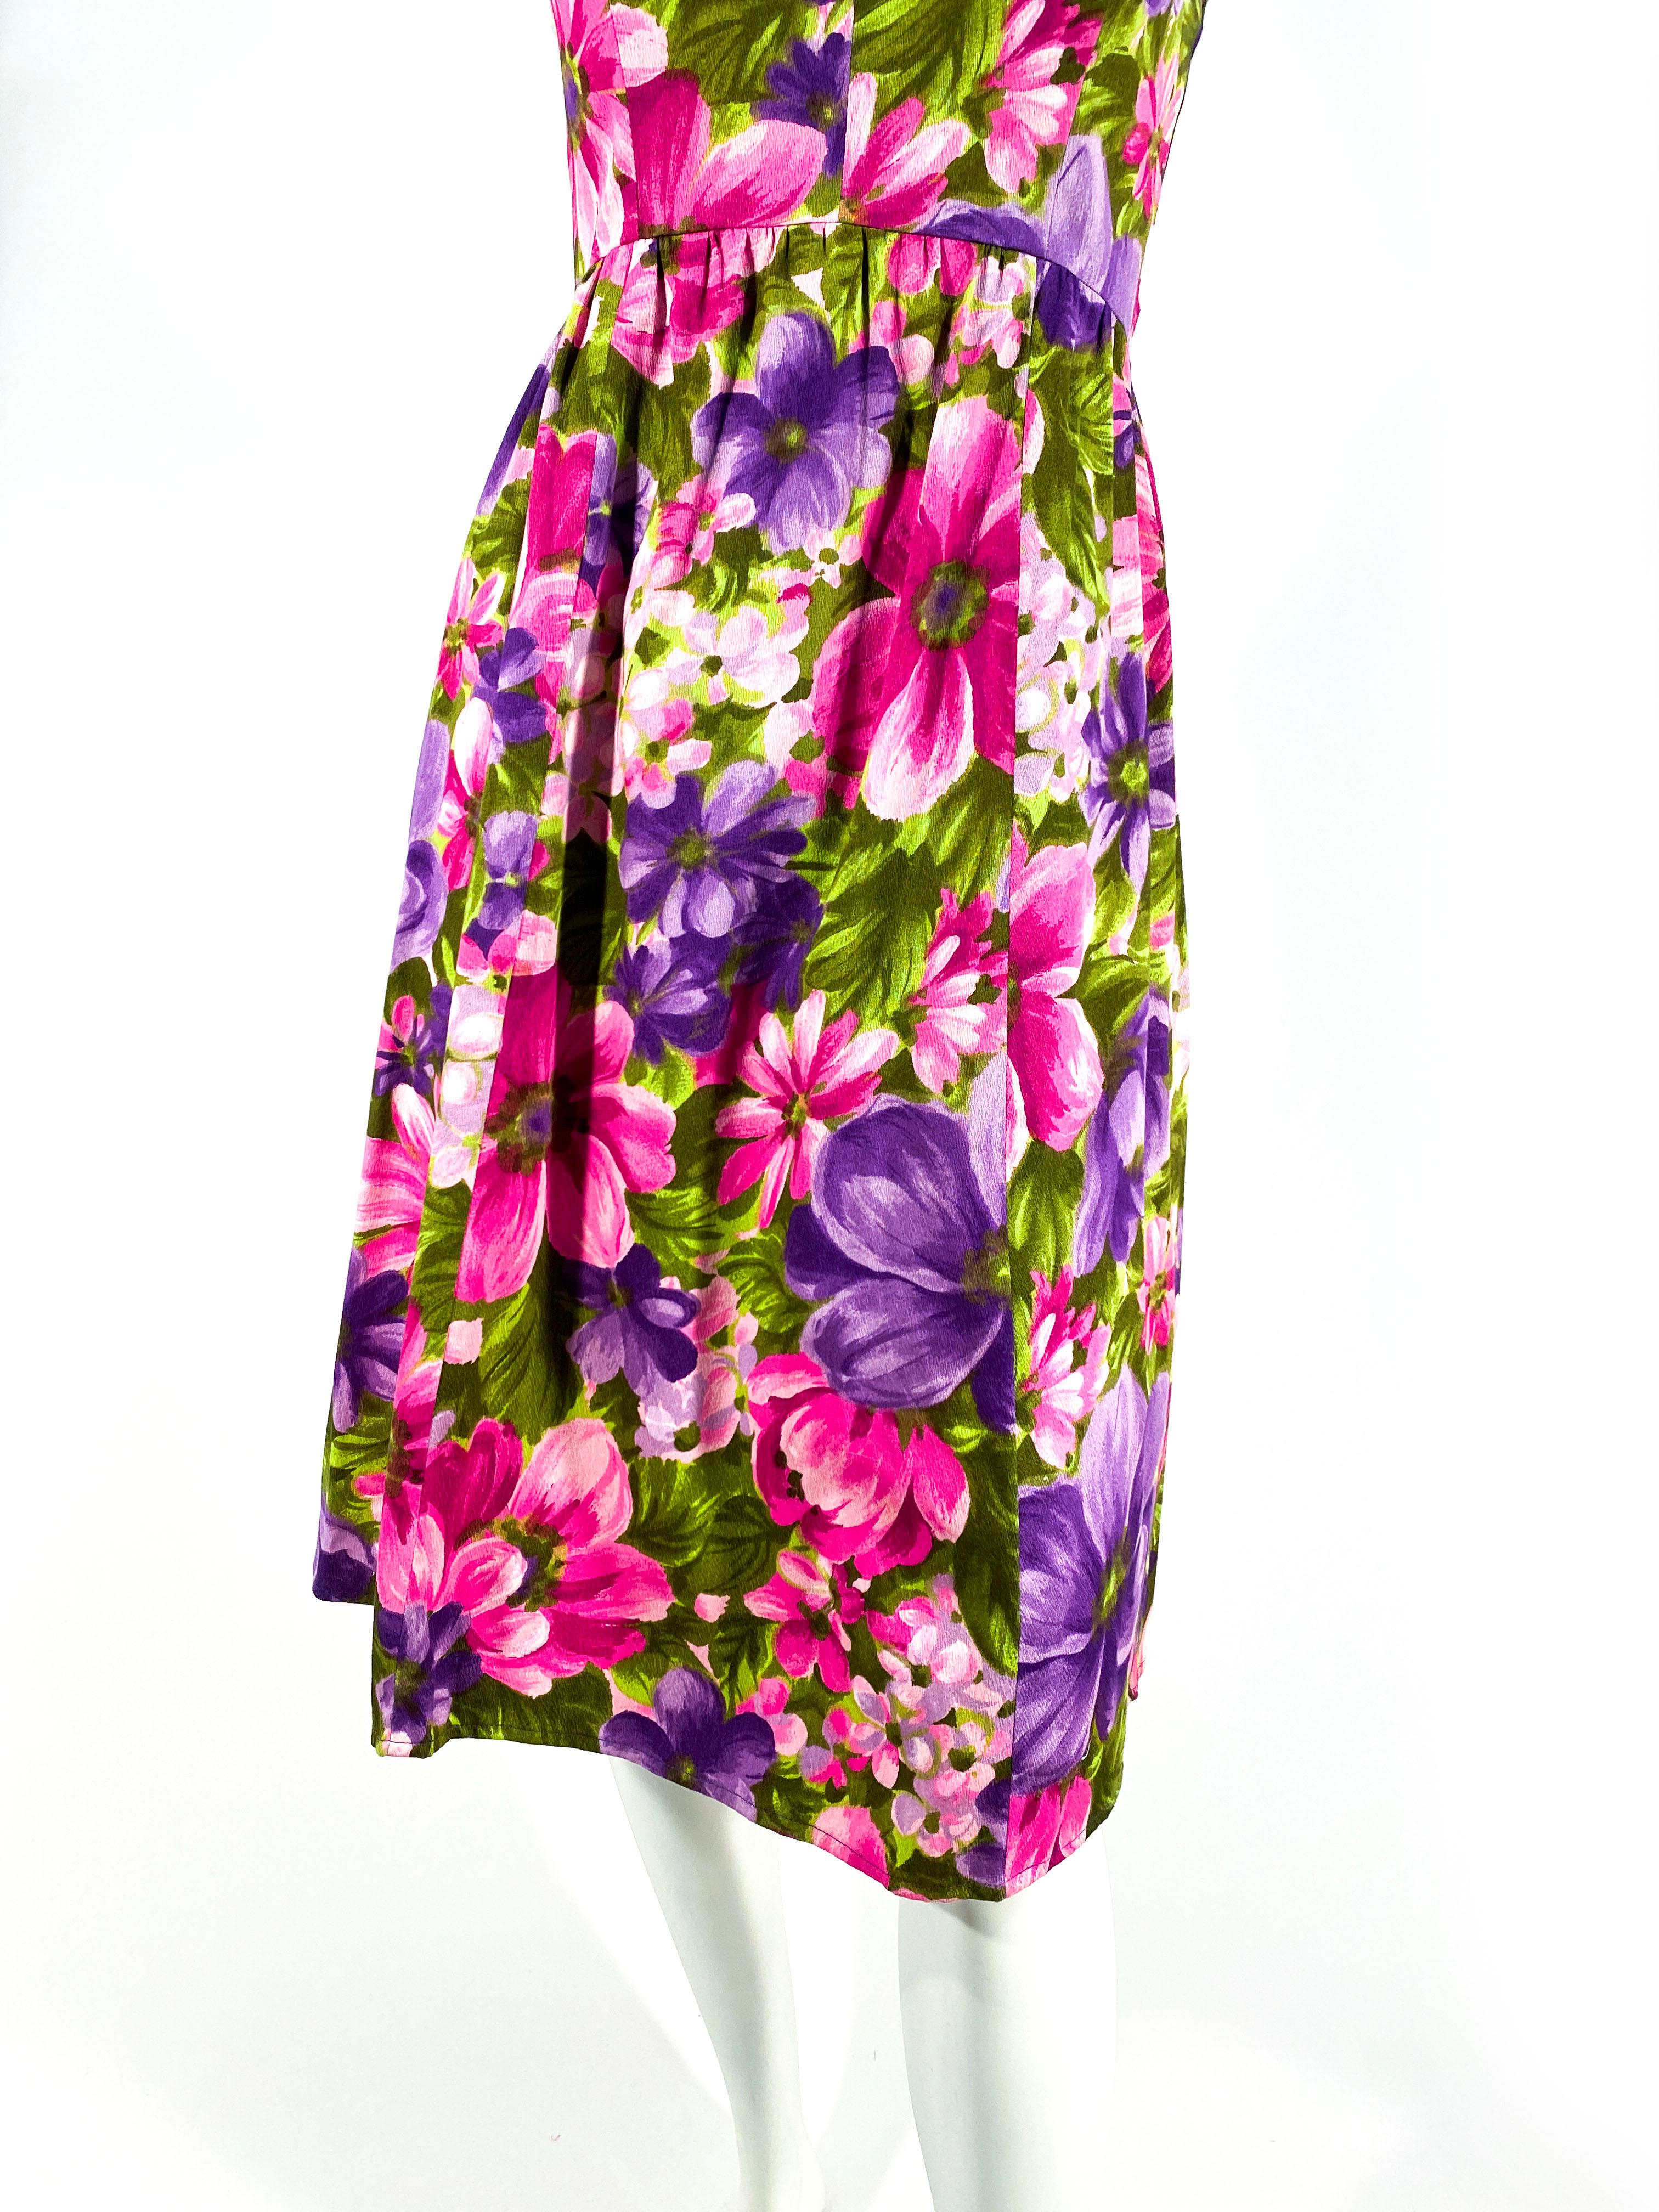 vibrant floral dress